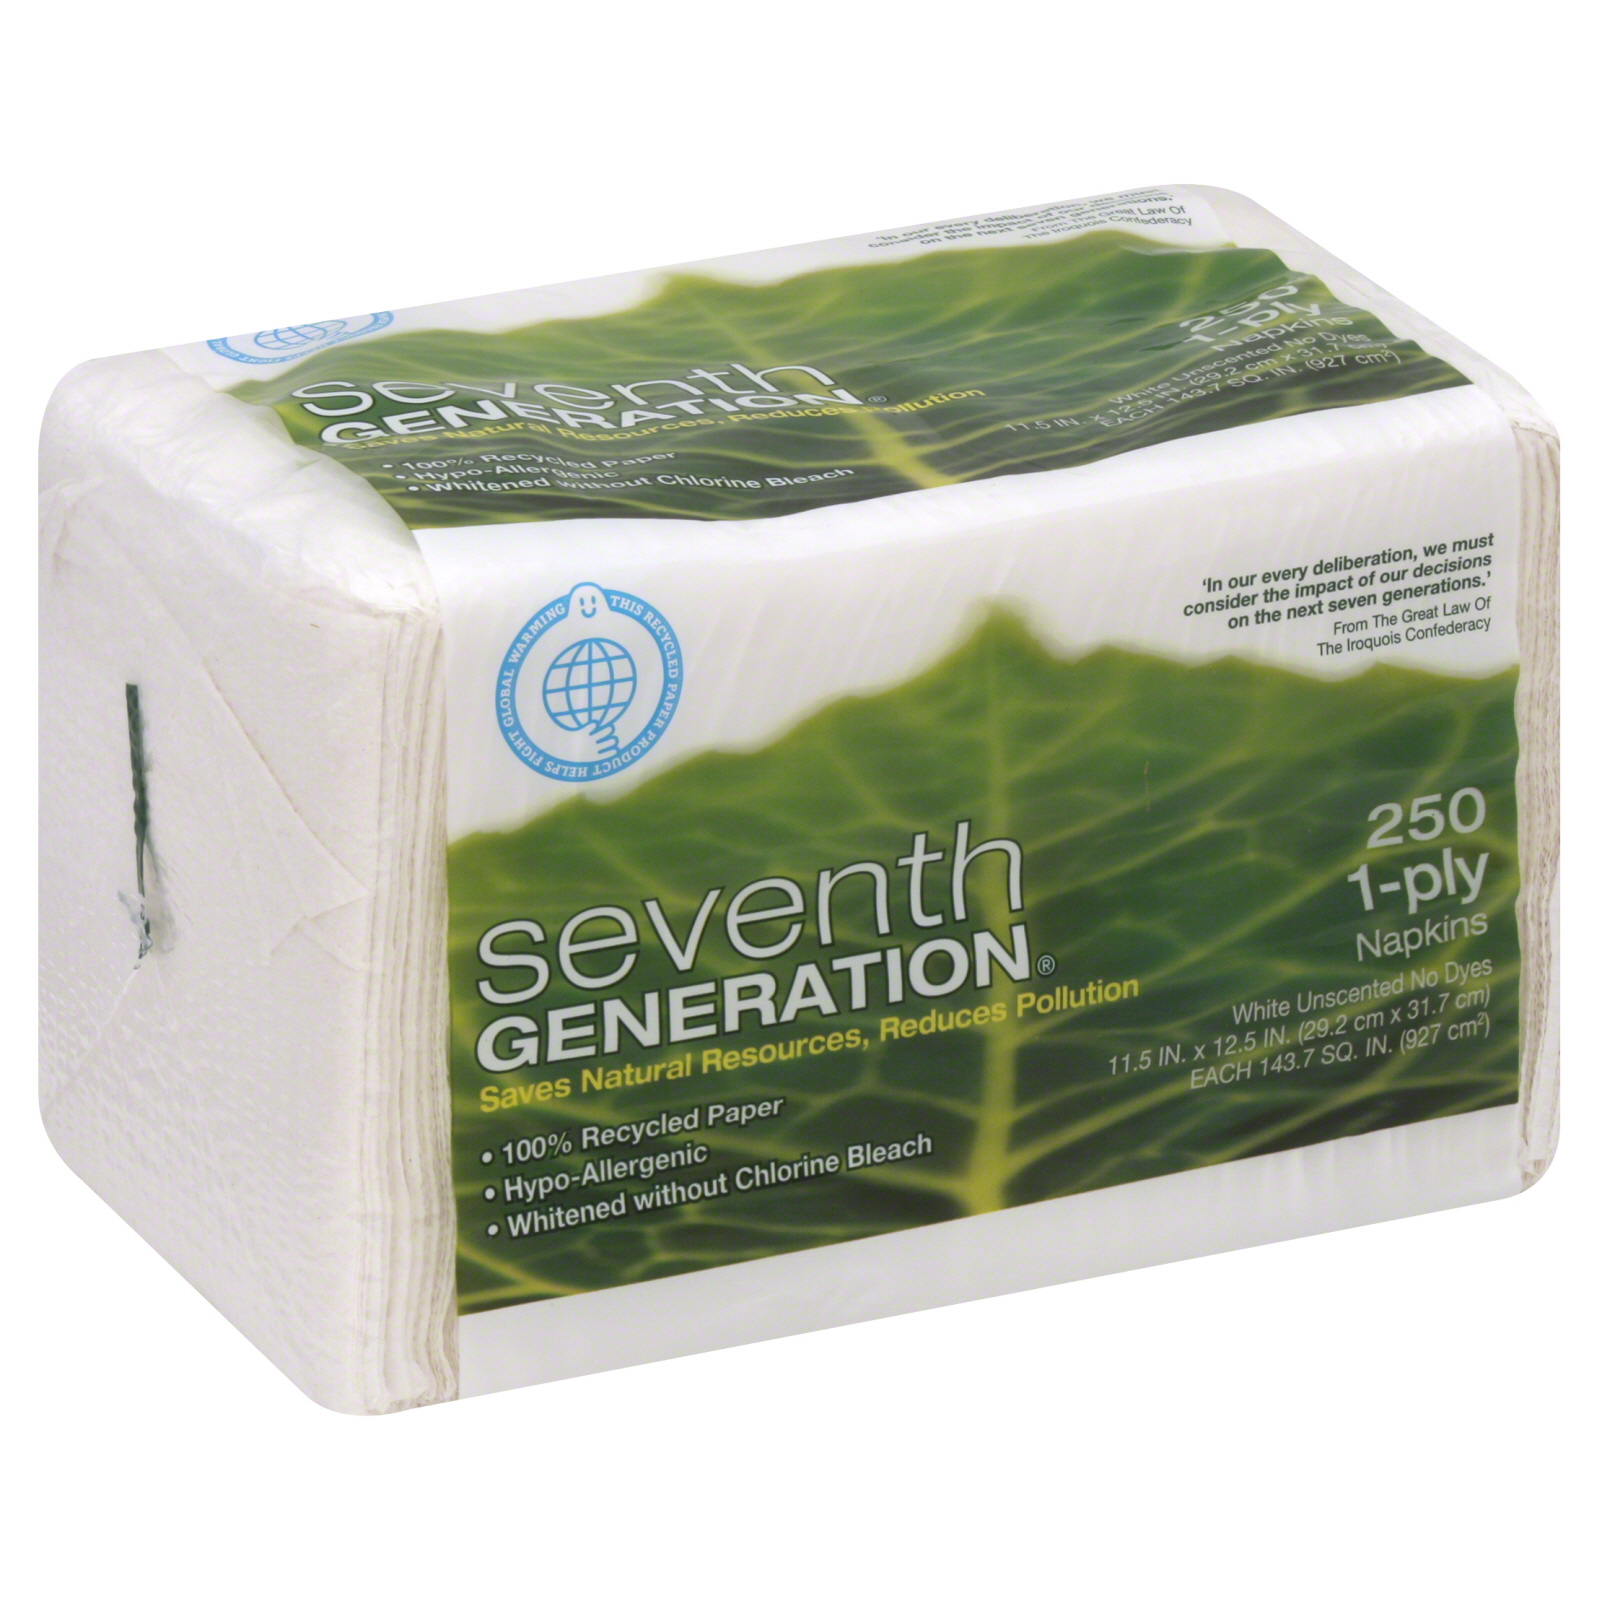 Seventh Generation SEV13713PK Napkins, Unscented, White, 1-Ply, 250 napkins